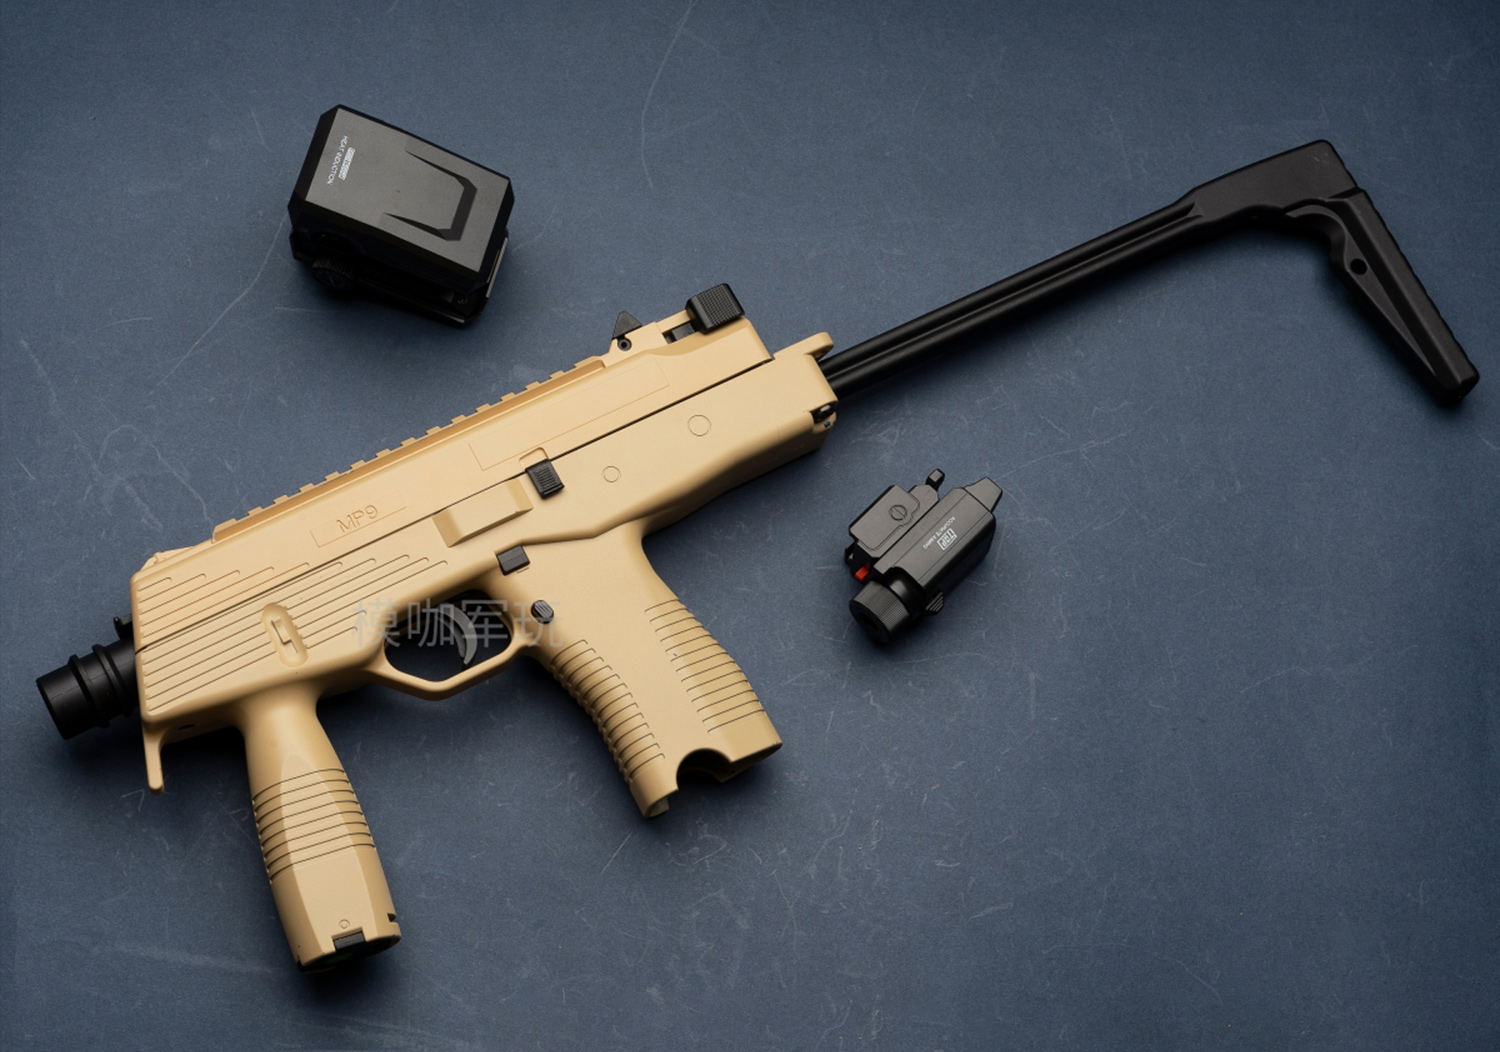 Lehui Toys MP9 Gel Ball Blaster, Thomet MP9 Realistic Toy Gun, Toy Guns That Look Real, Submachine Gun Nerf Gun For Adults